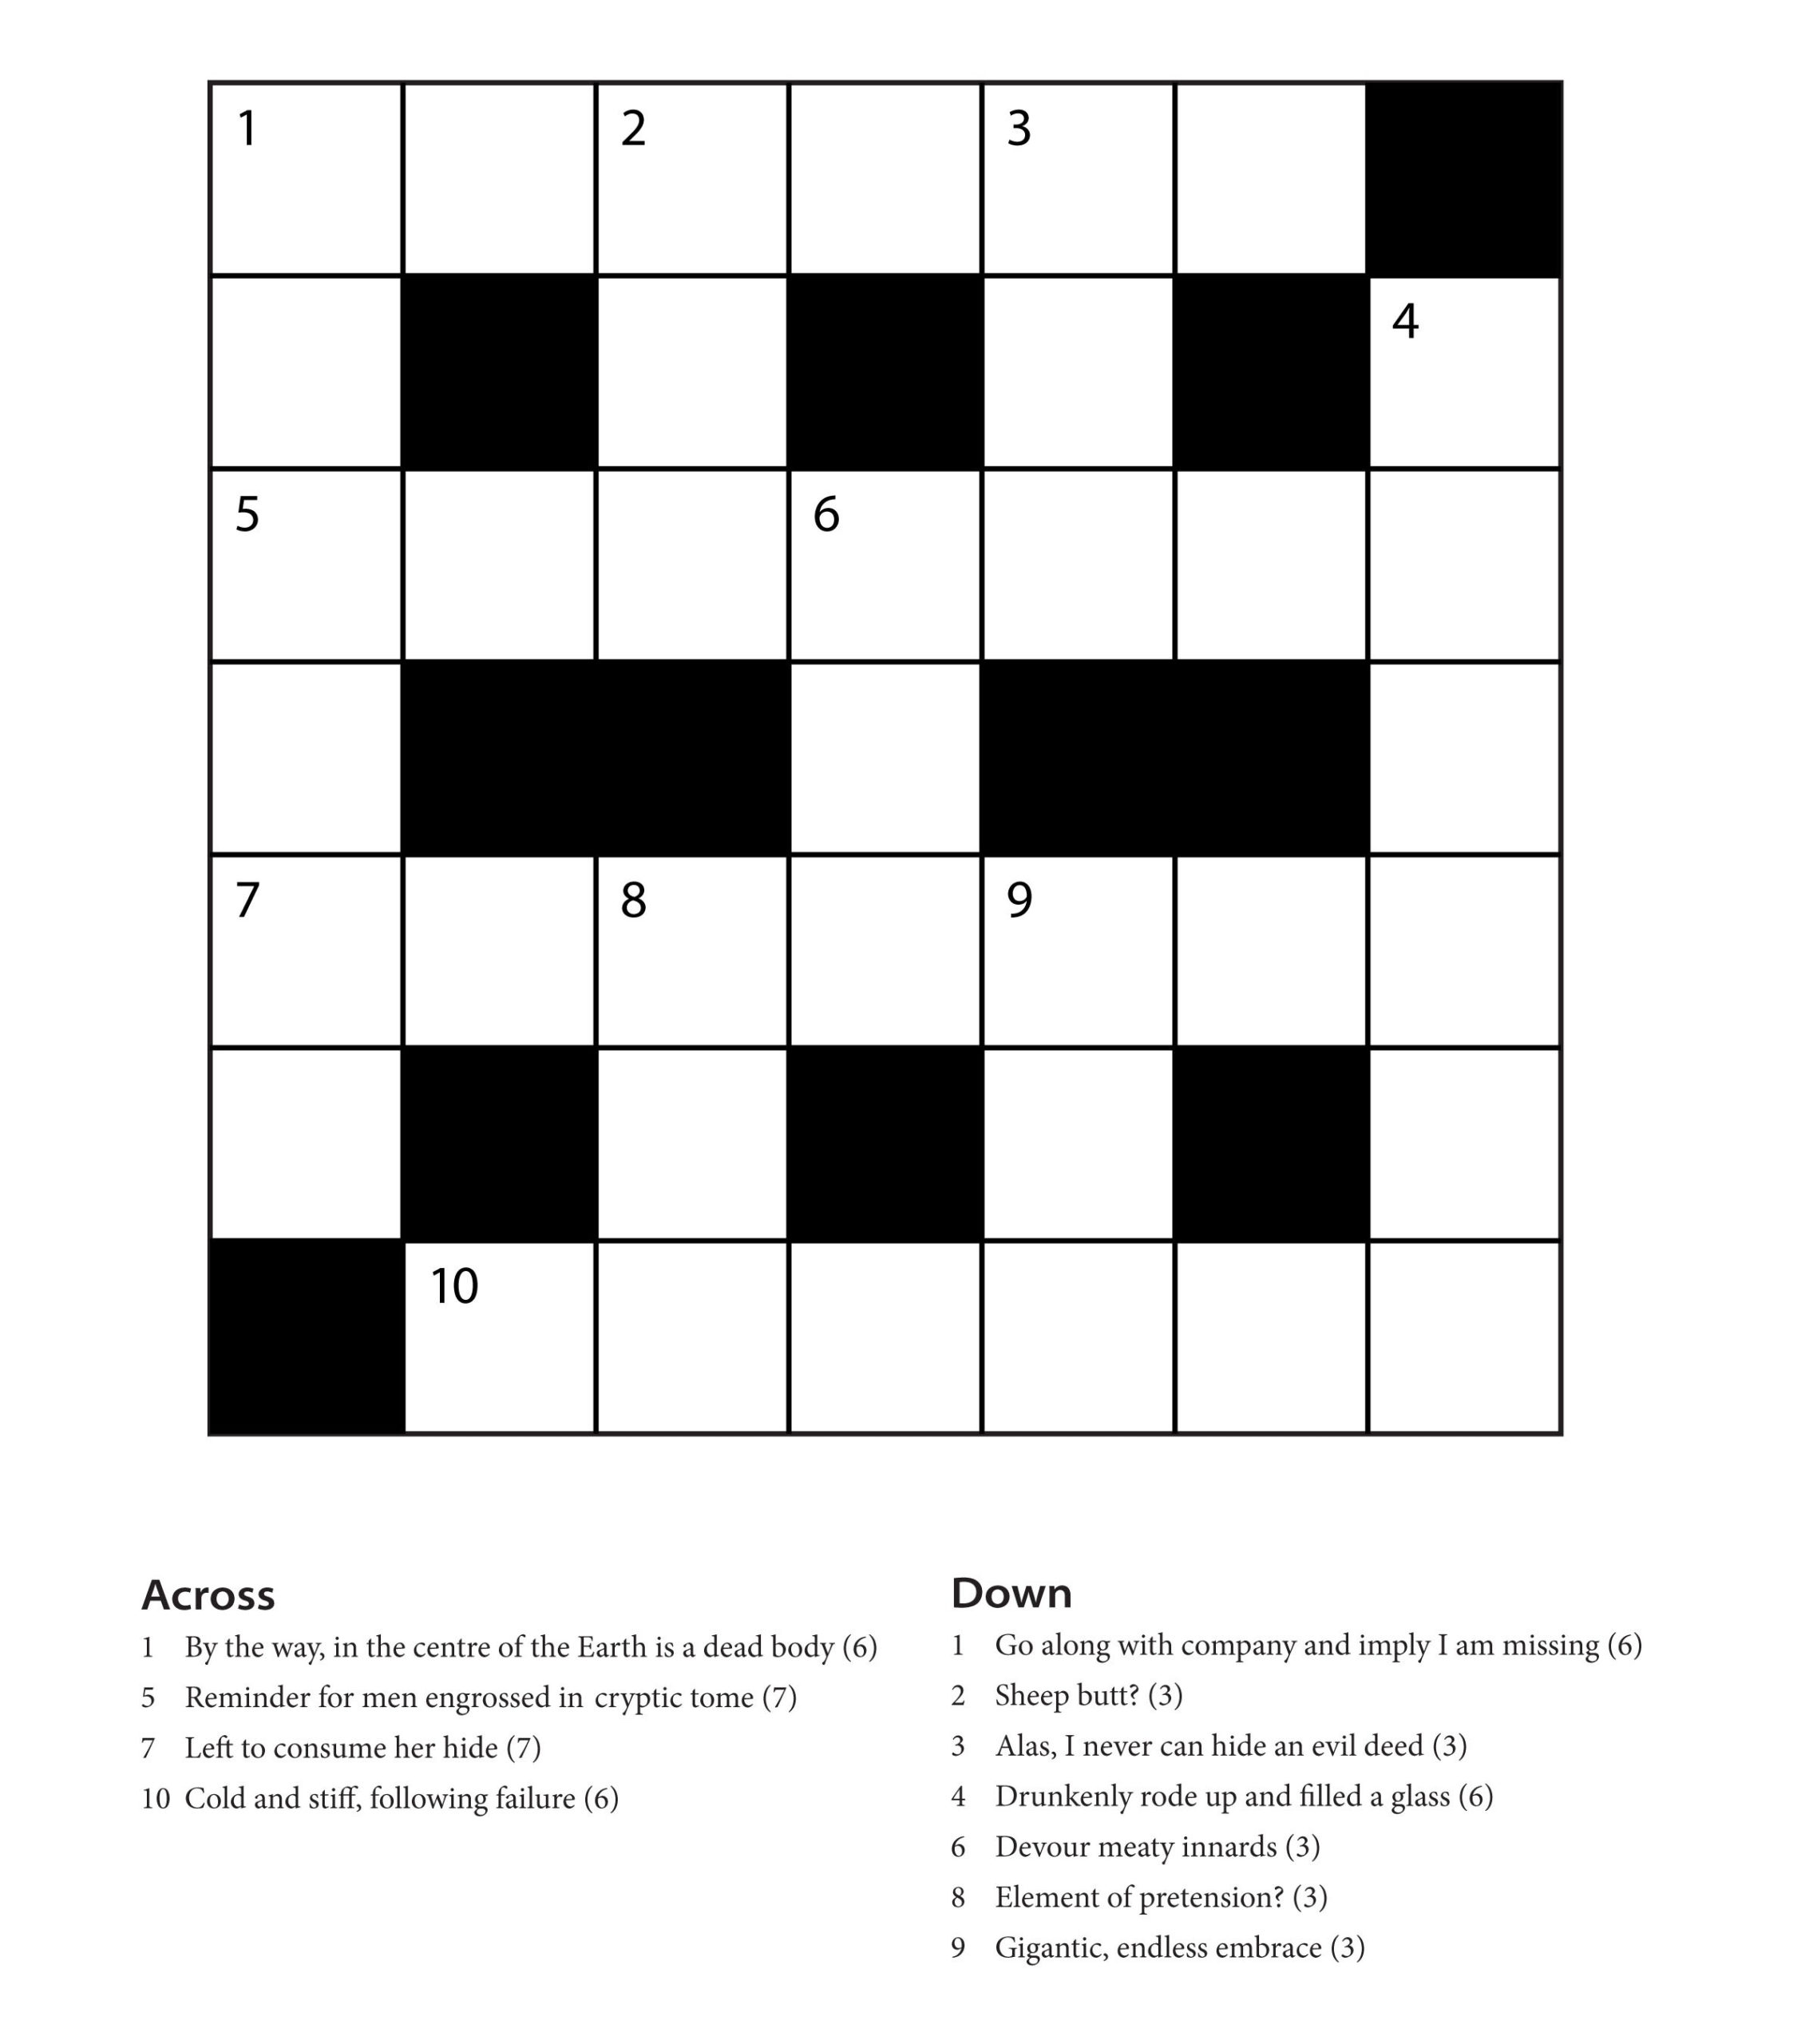 Beginner Easy Crossword Puzzles Printable